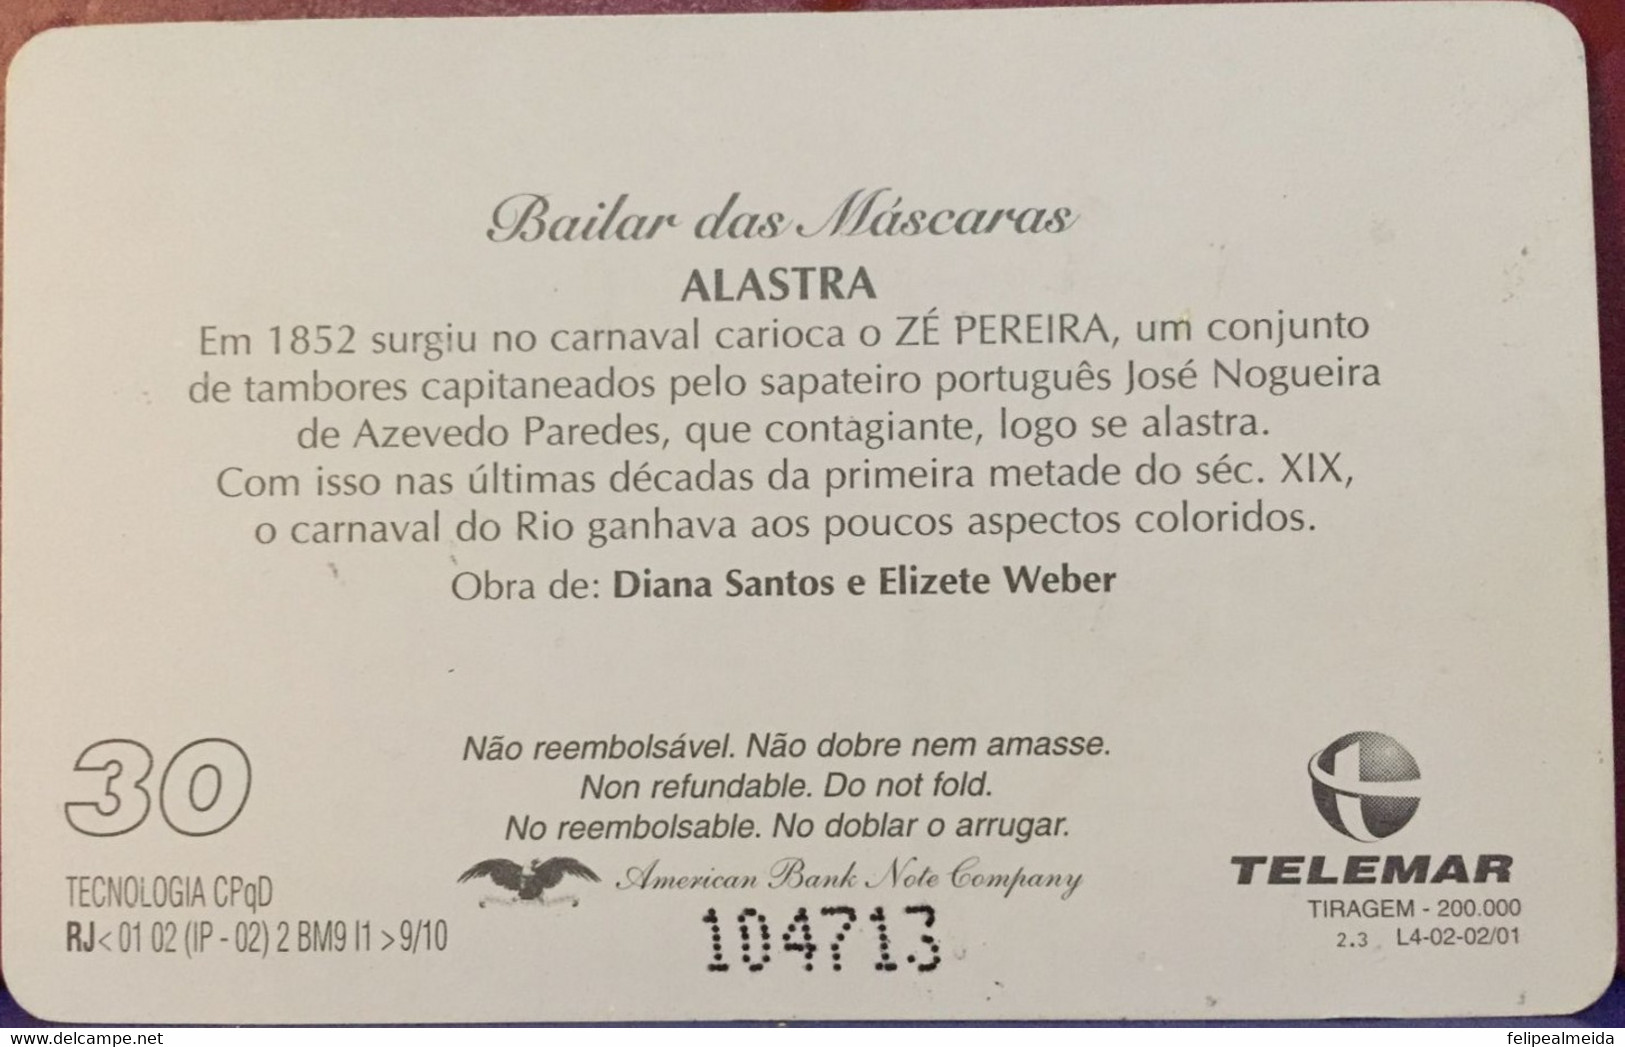 Phone Card Manufactured By Telemar In 2001 - Bailar Das Mascaras - Alastra - Cultura